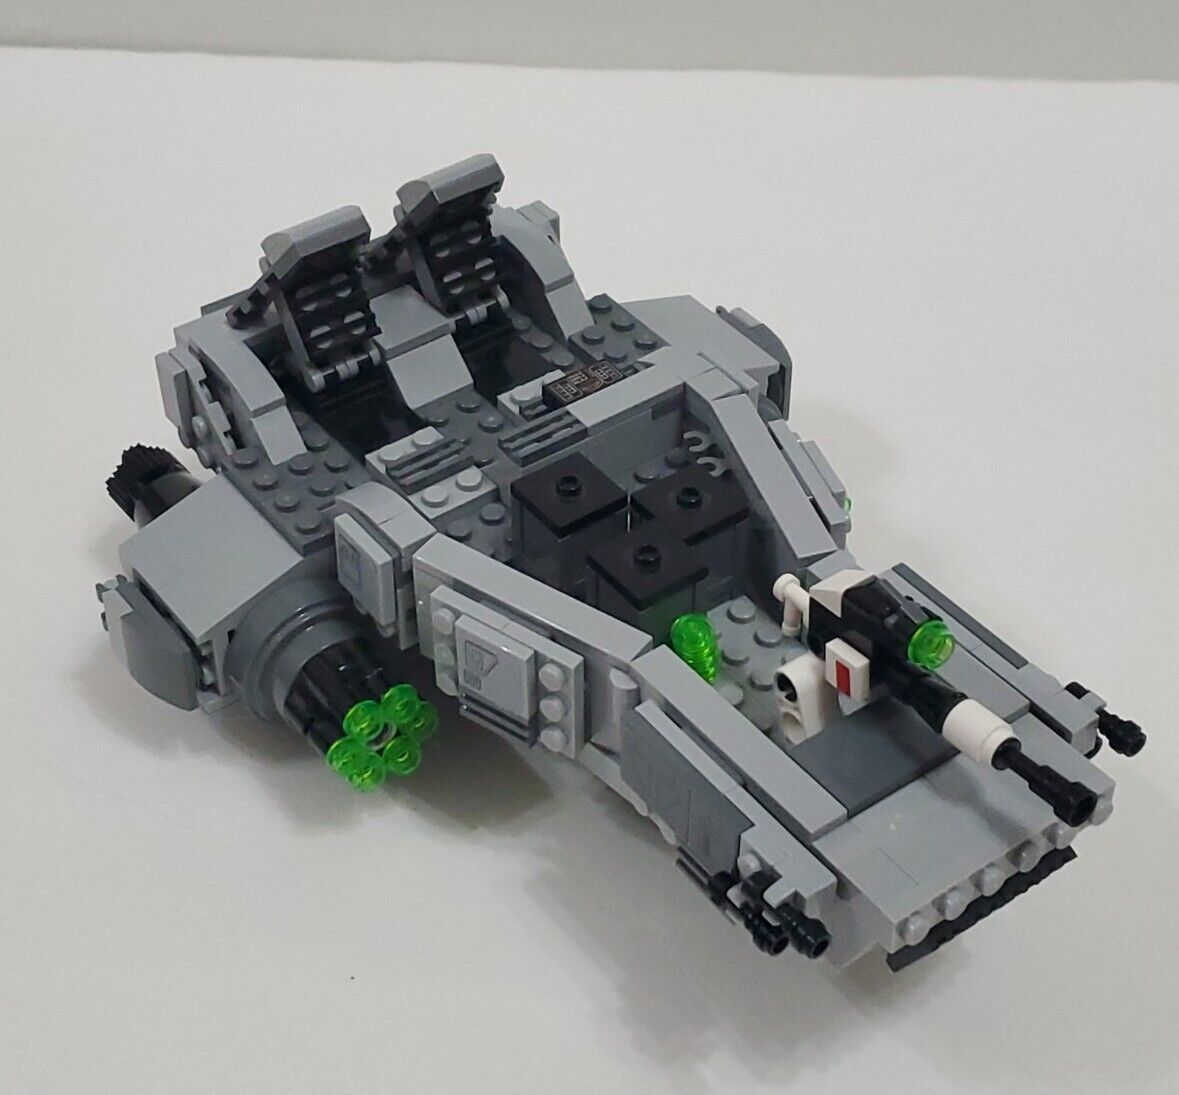 LEGO Star Wars: First Order Snowspeeder (75100). Missing Figures & Instructions 